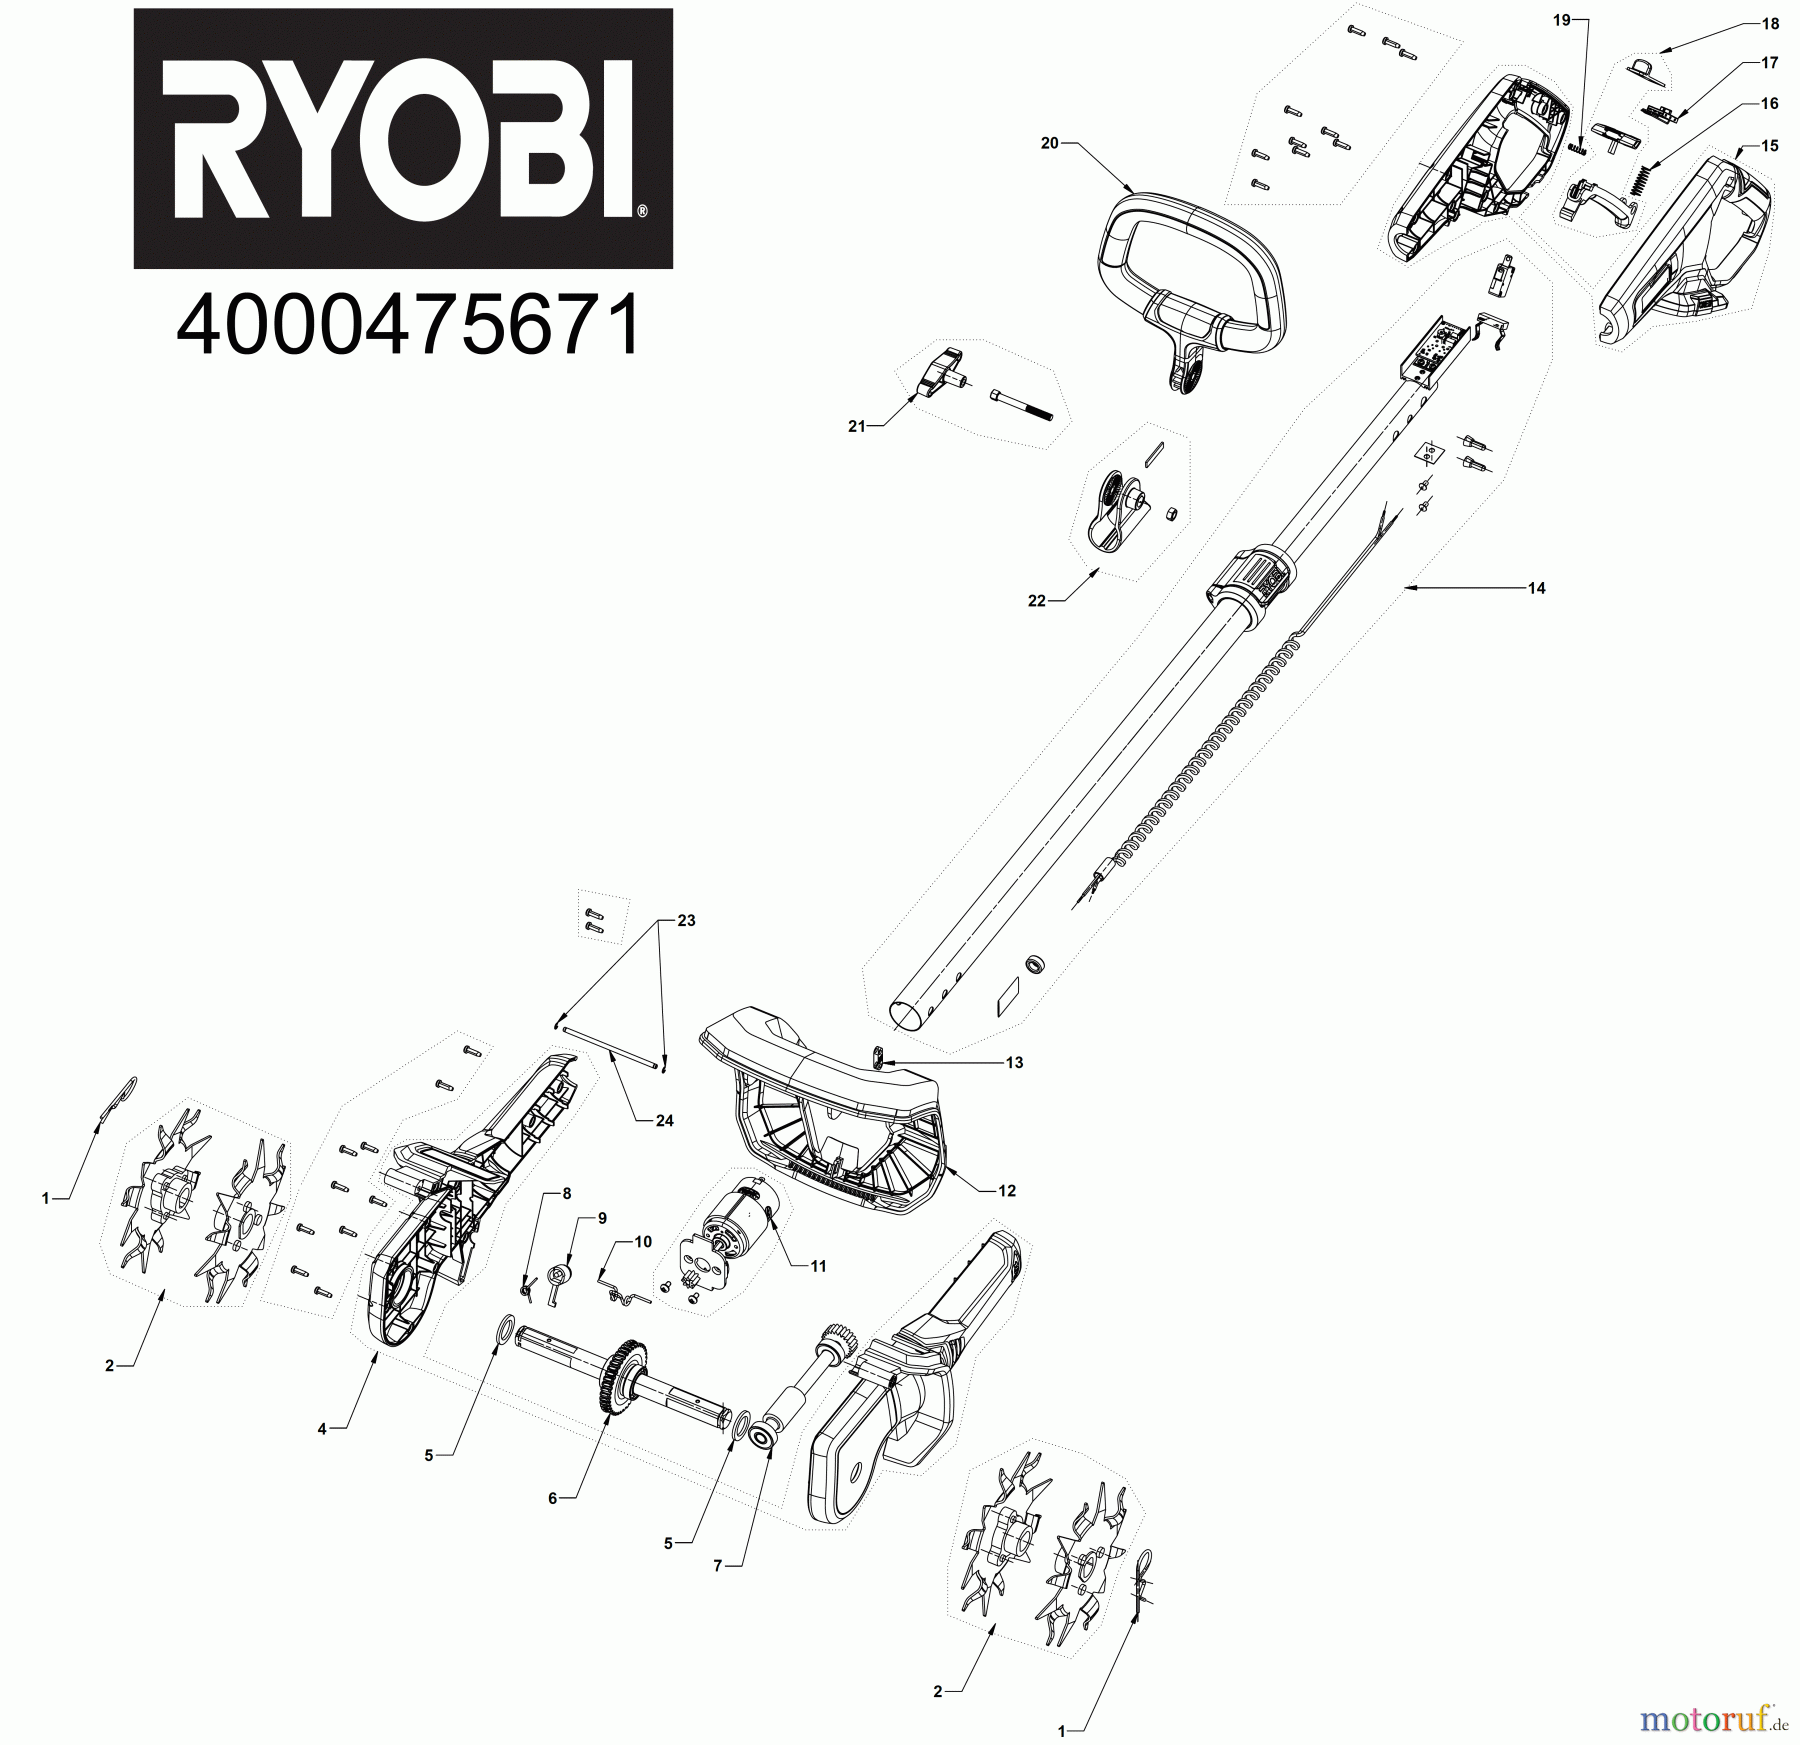  Ryobi Bodenhacken Kultivator RY18CVA Seite 1